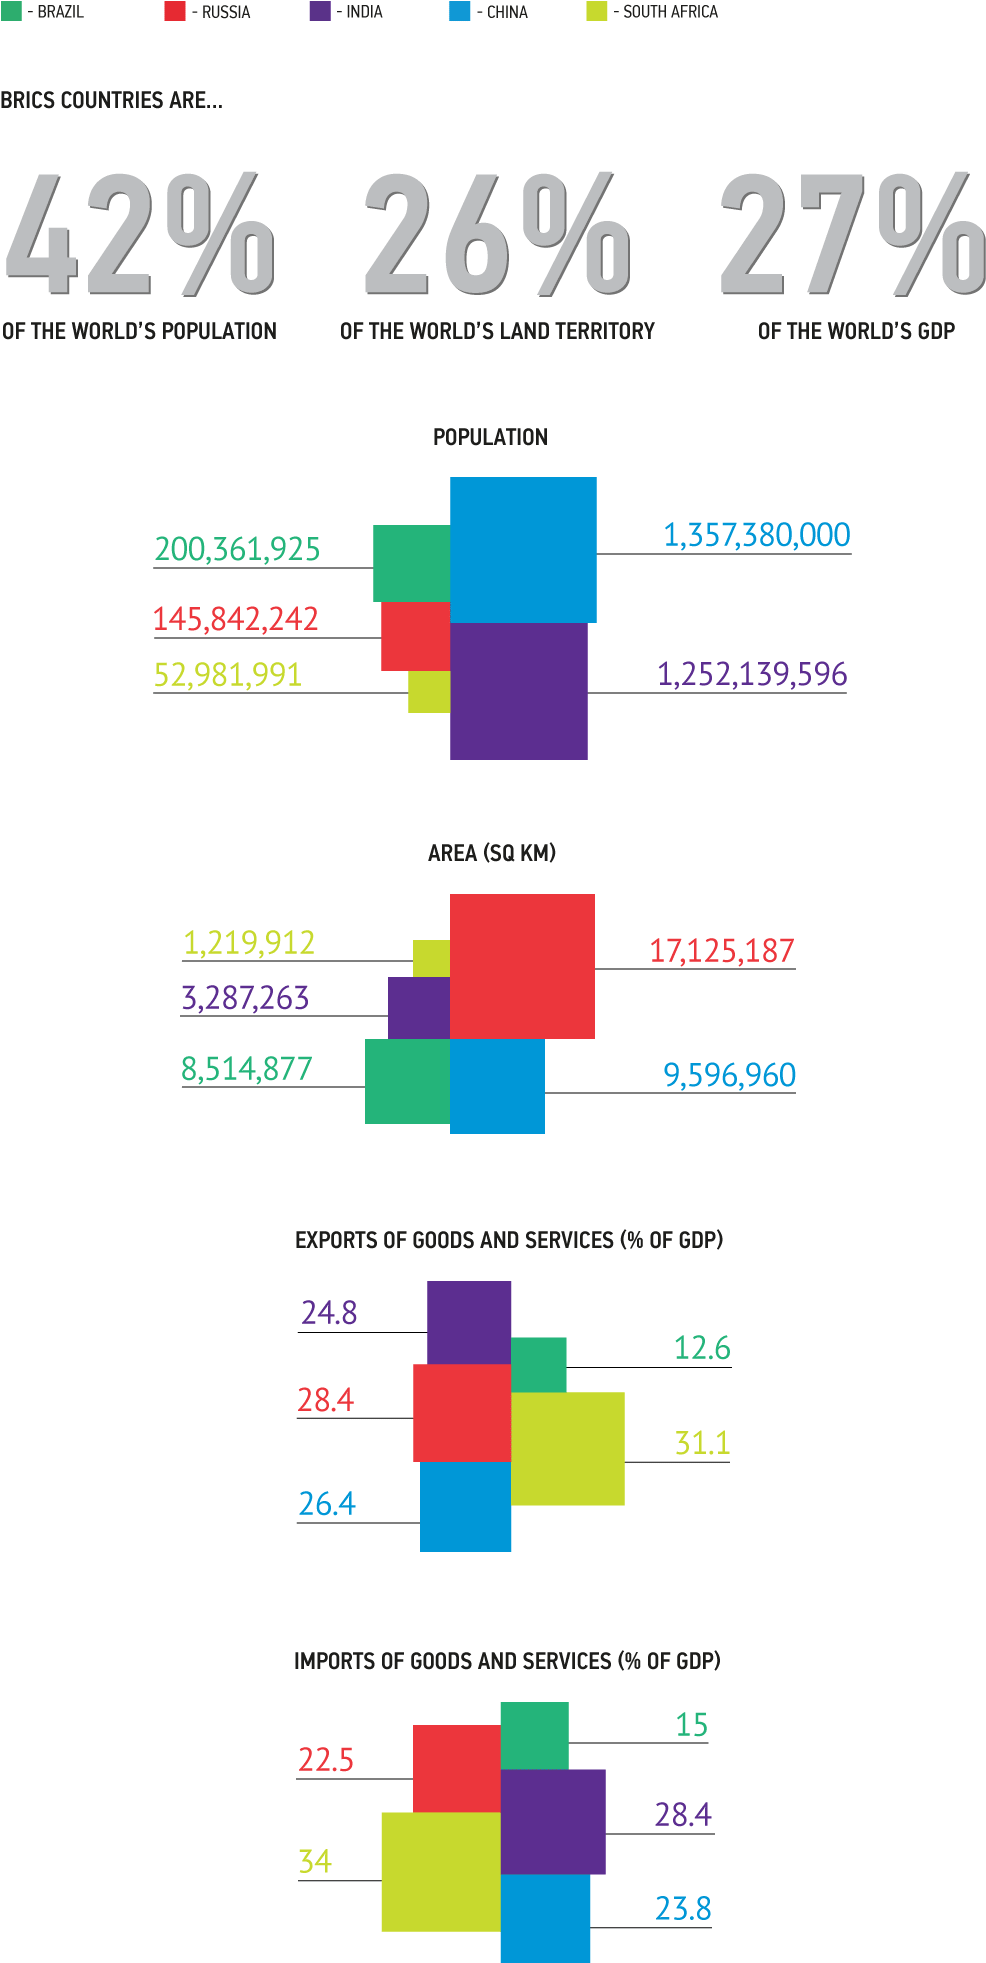 BRICS in Numbers